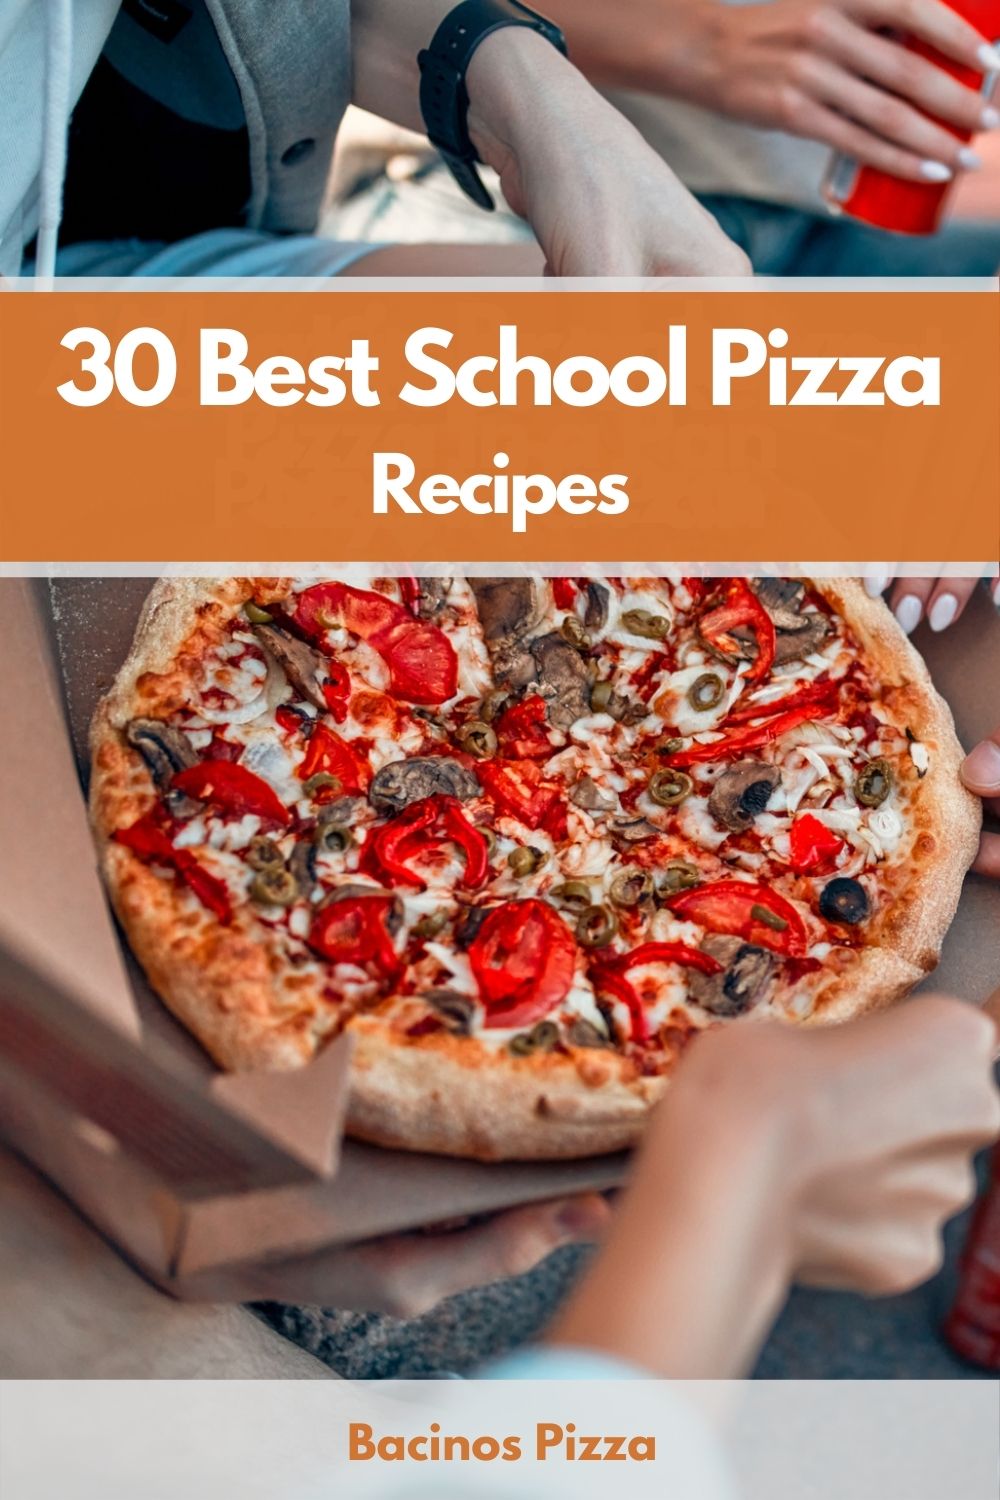 30 Best School Pizza Recipes pin